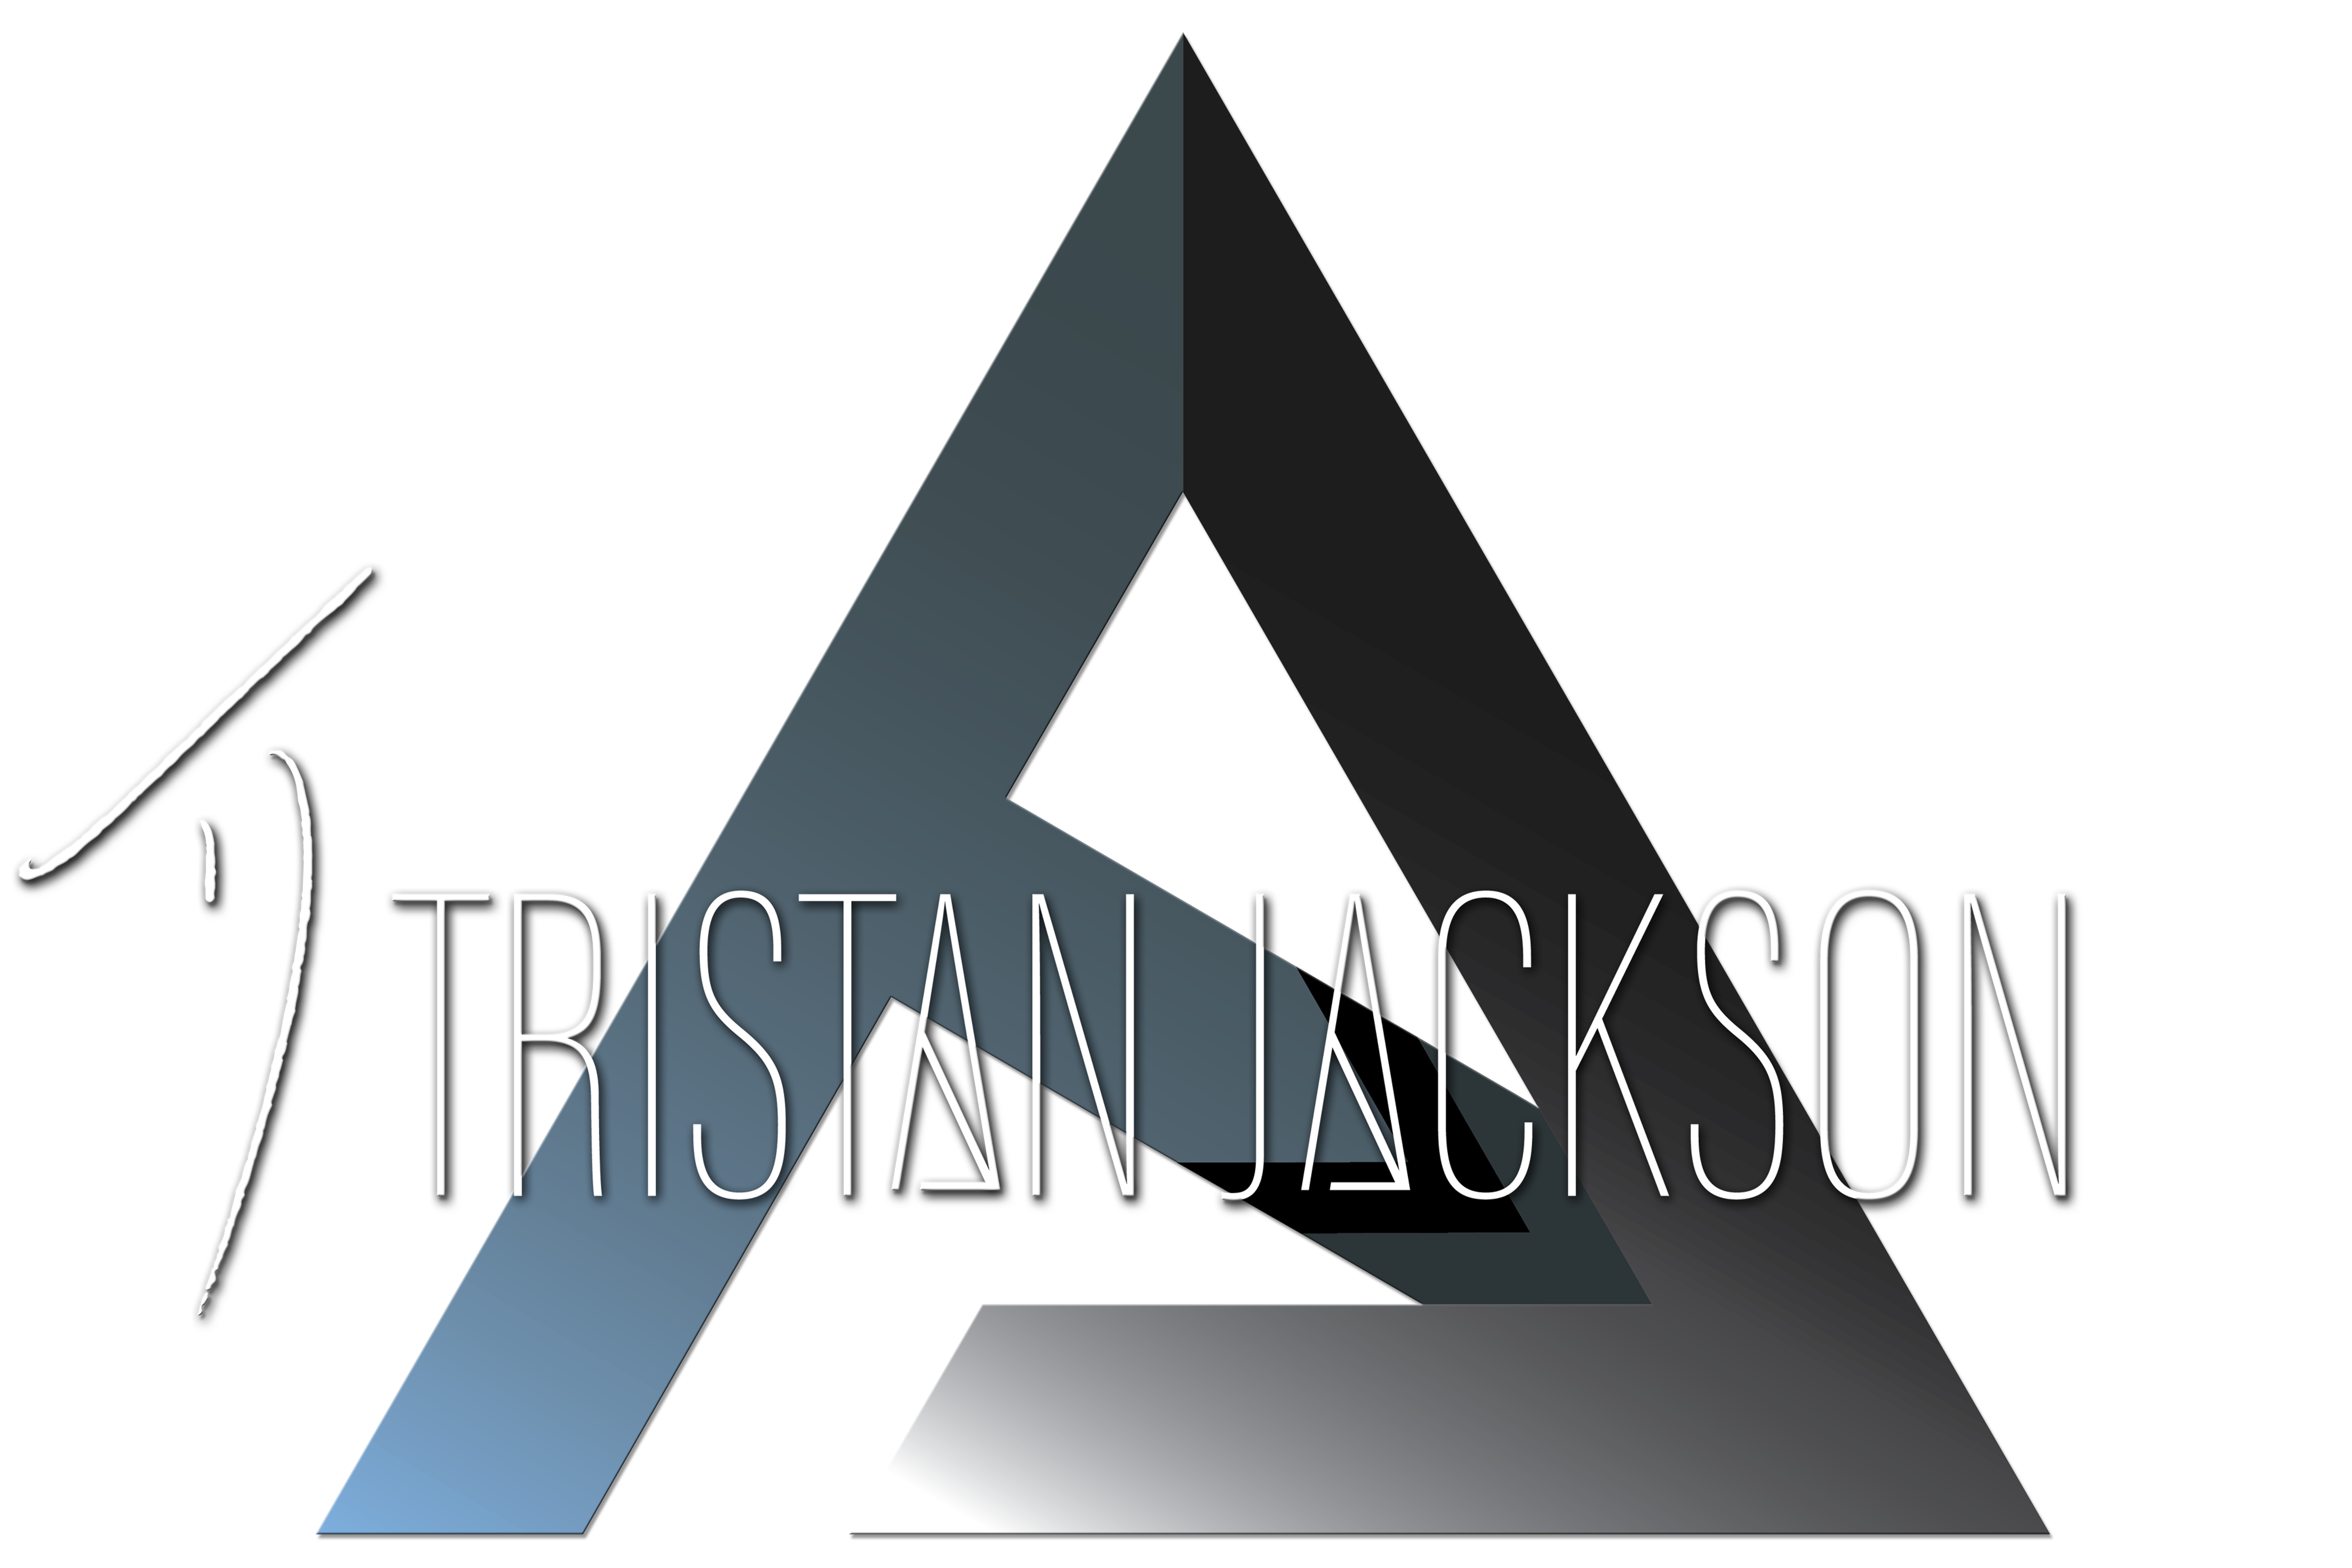 Tristan Jackson